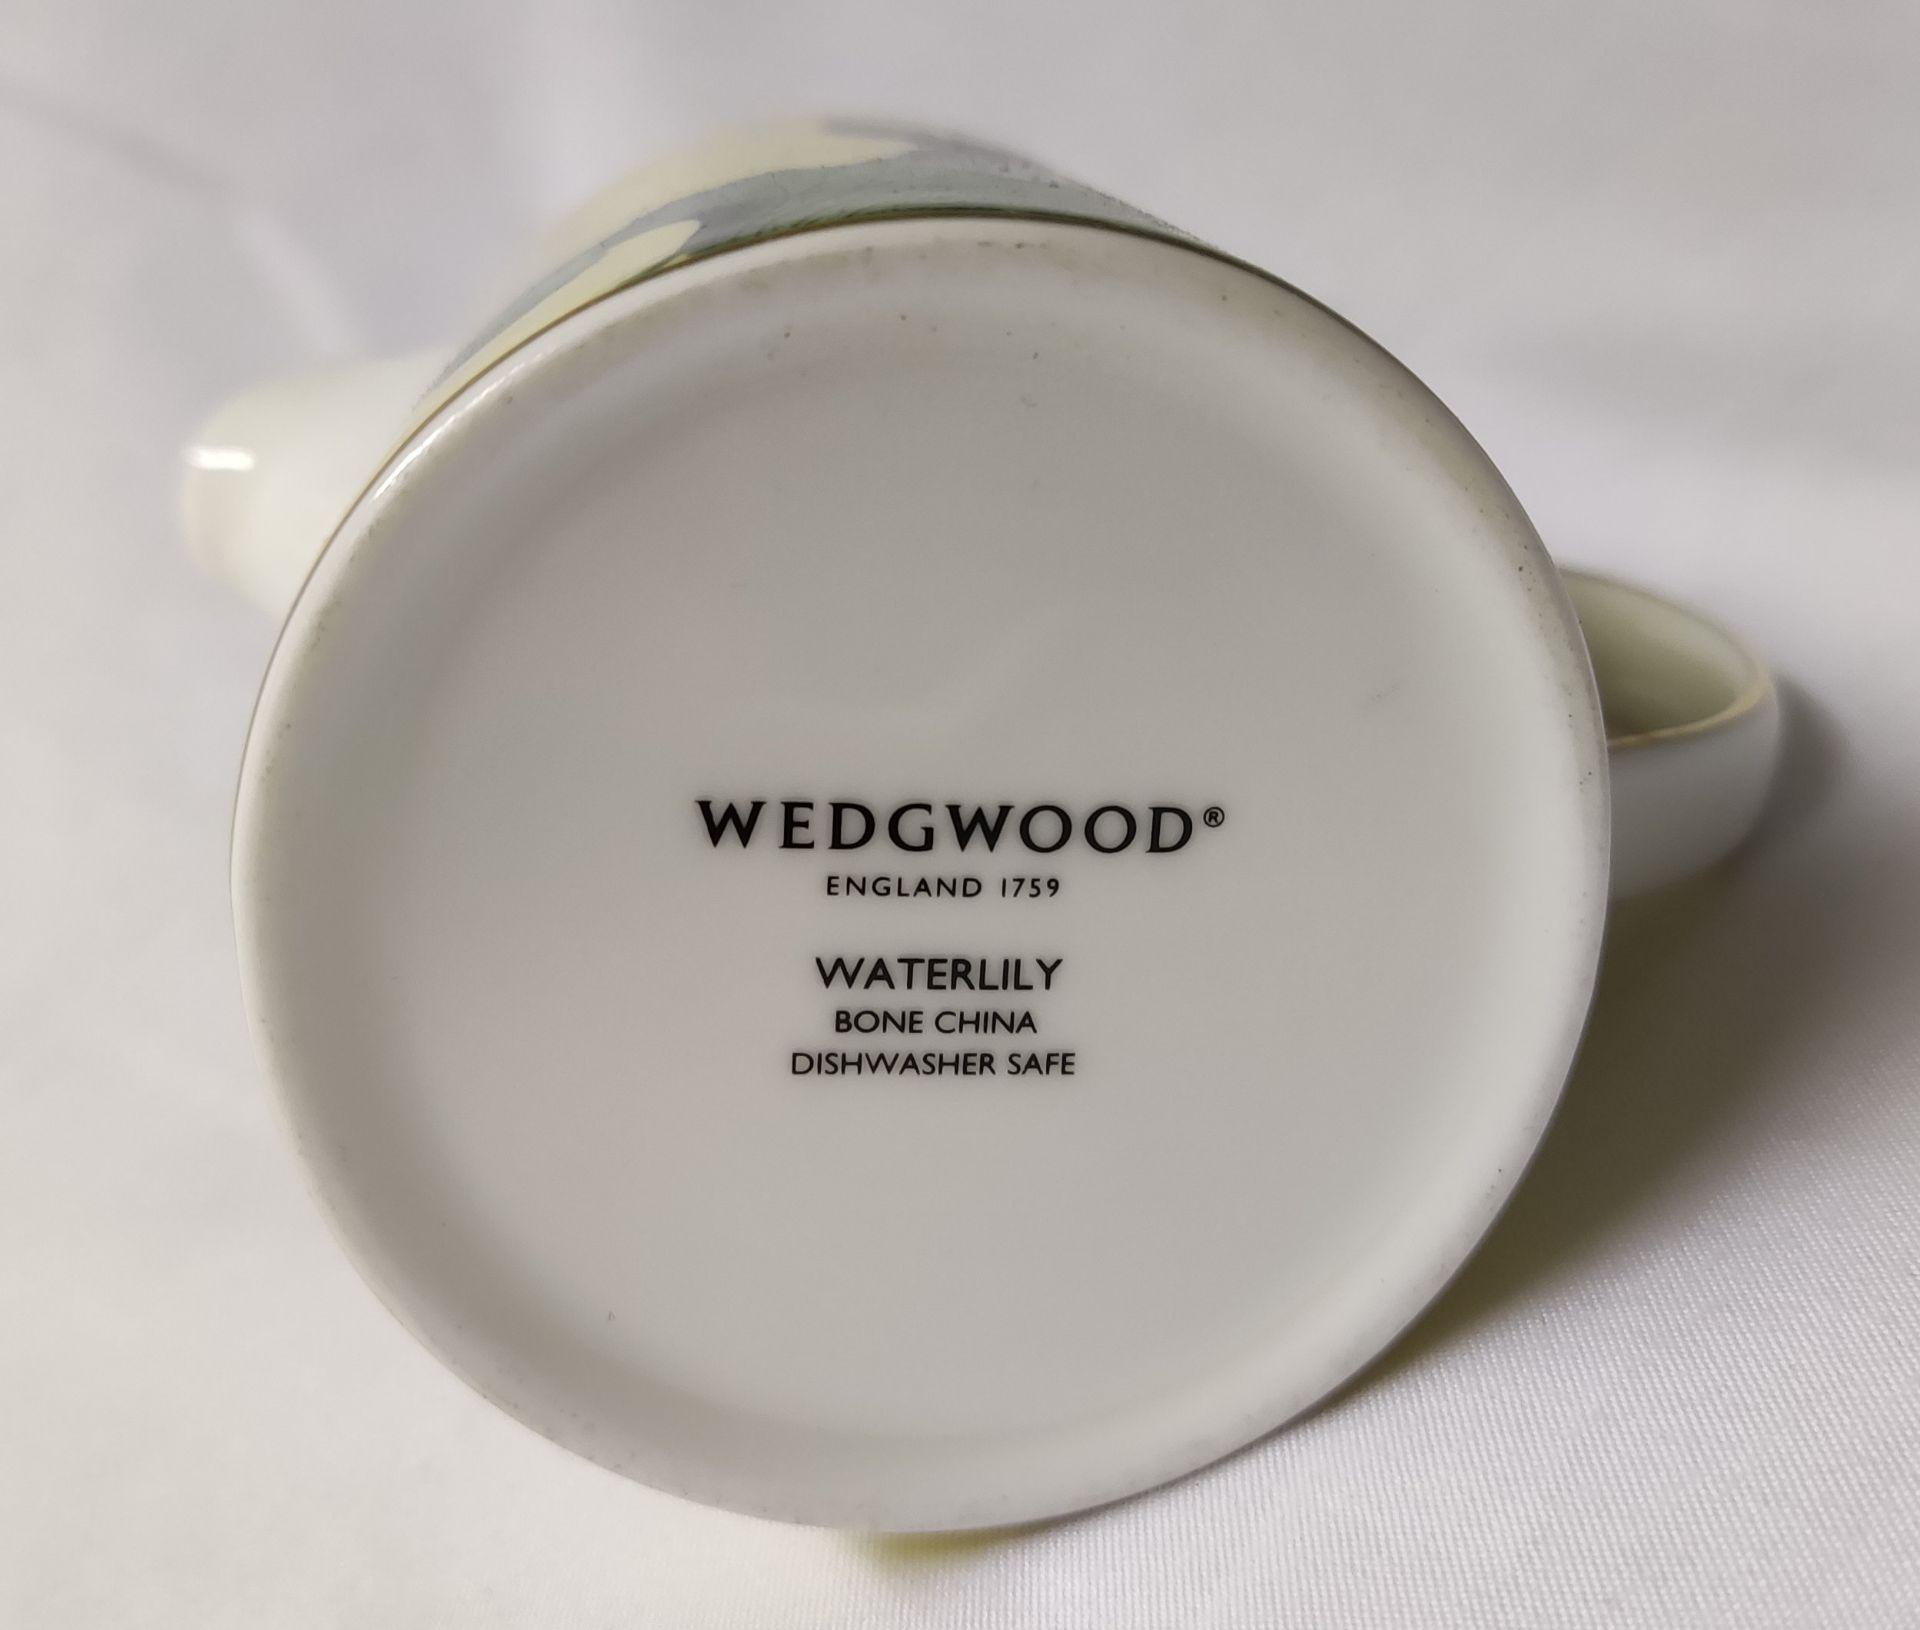 1 x WEDGWOOD Wonderlust Waterlily Fine Bone China Sugar & Creamer Set - New/Boxed - RRP £80 - - Image 3 of 22